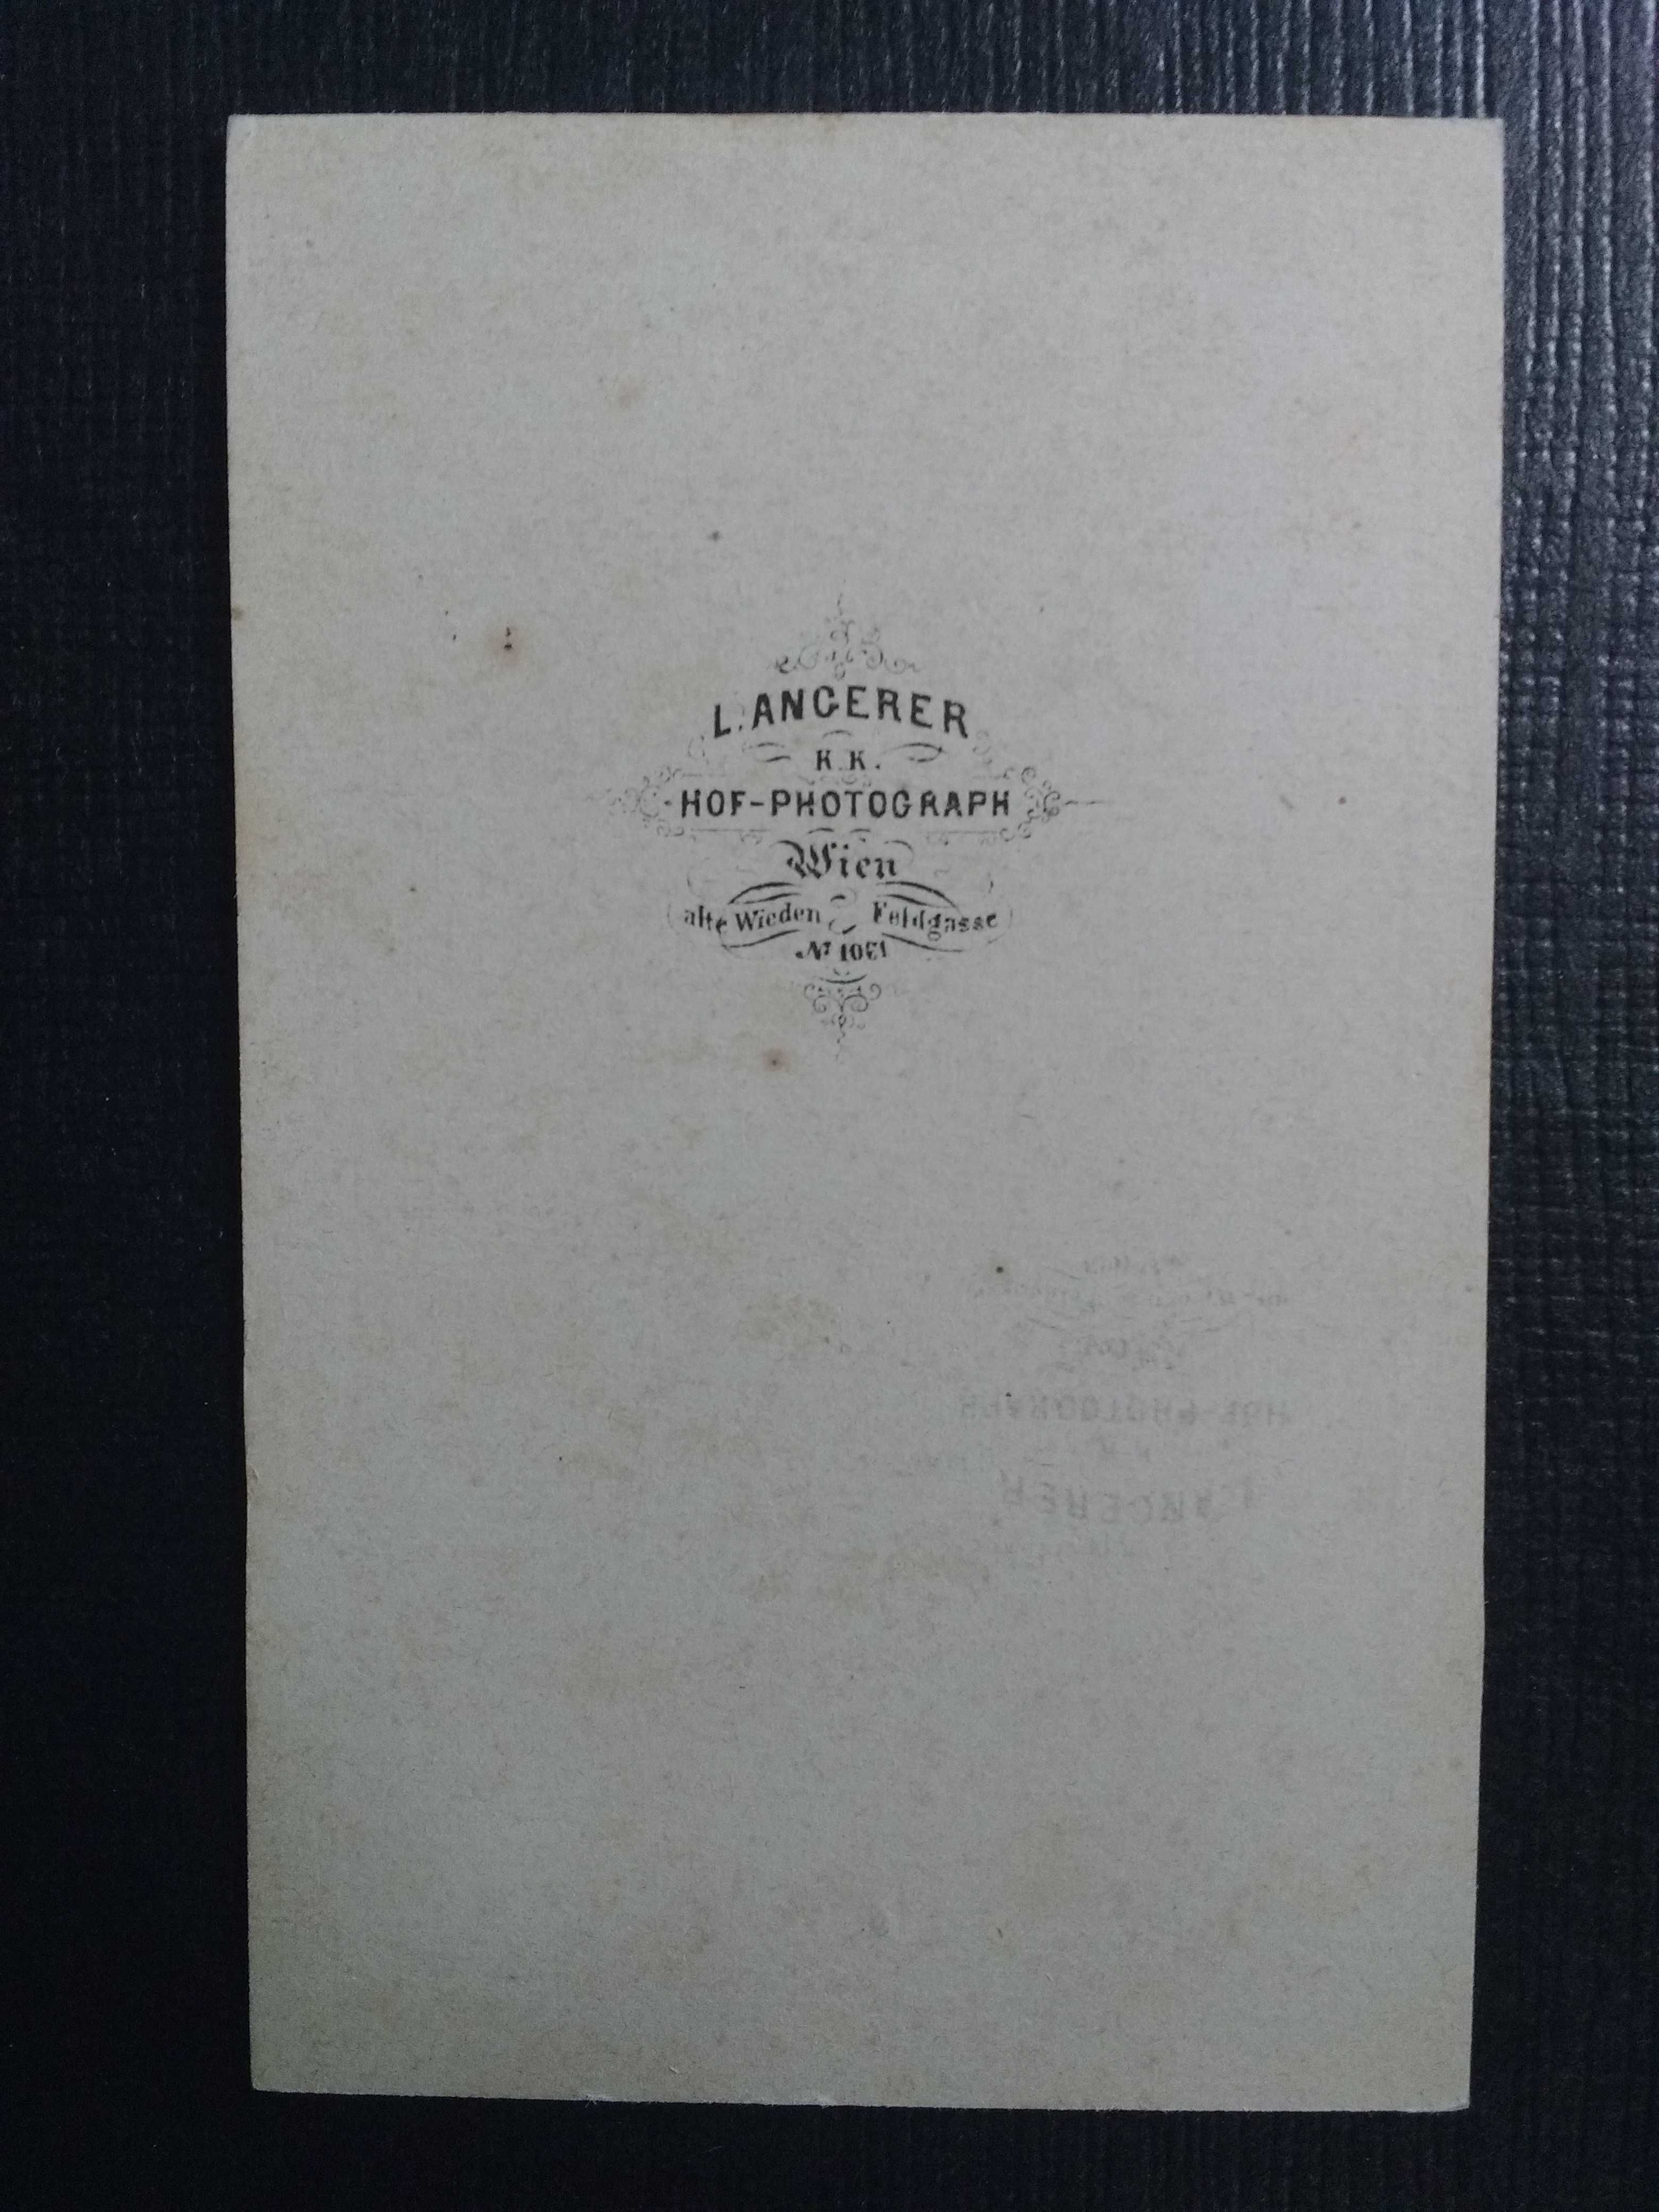 Álbum de fotografias de figuras ilustres de cerca de 1860